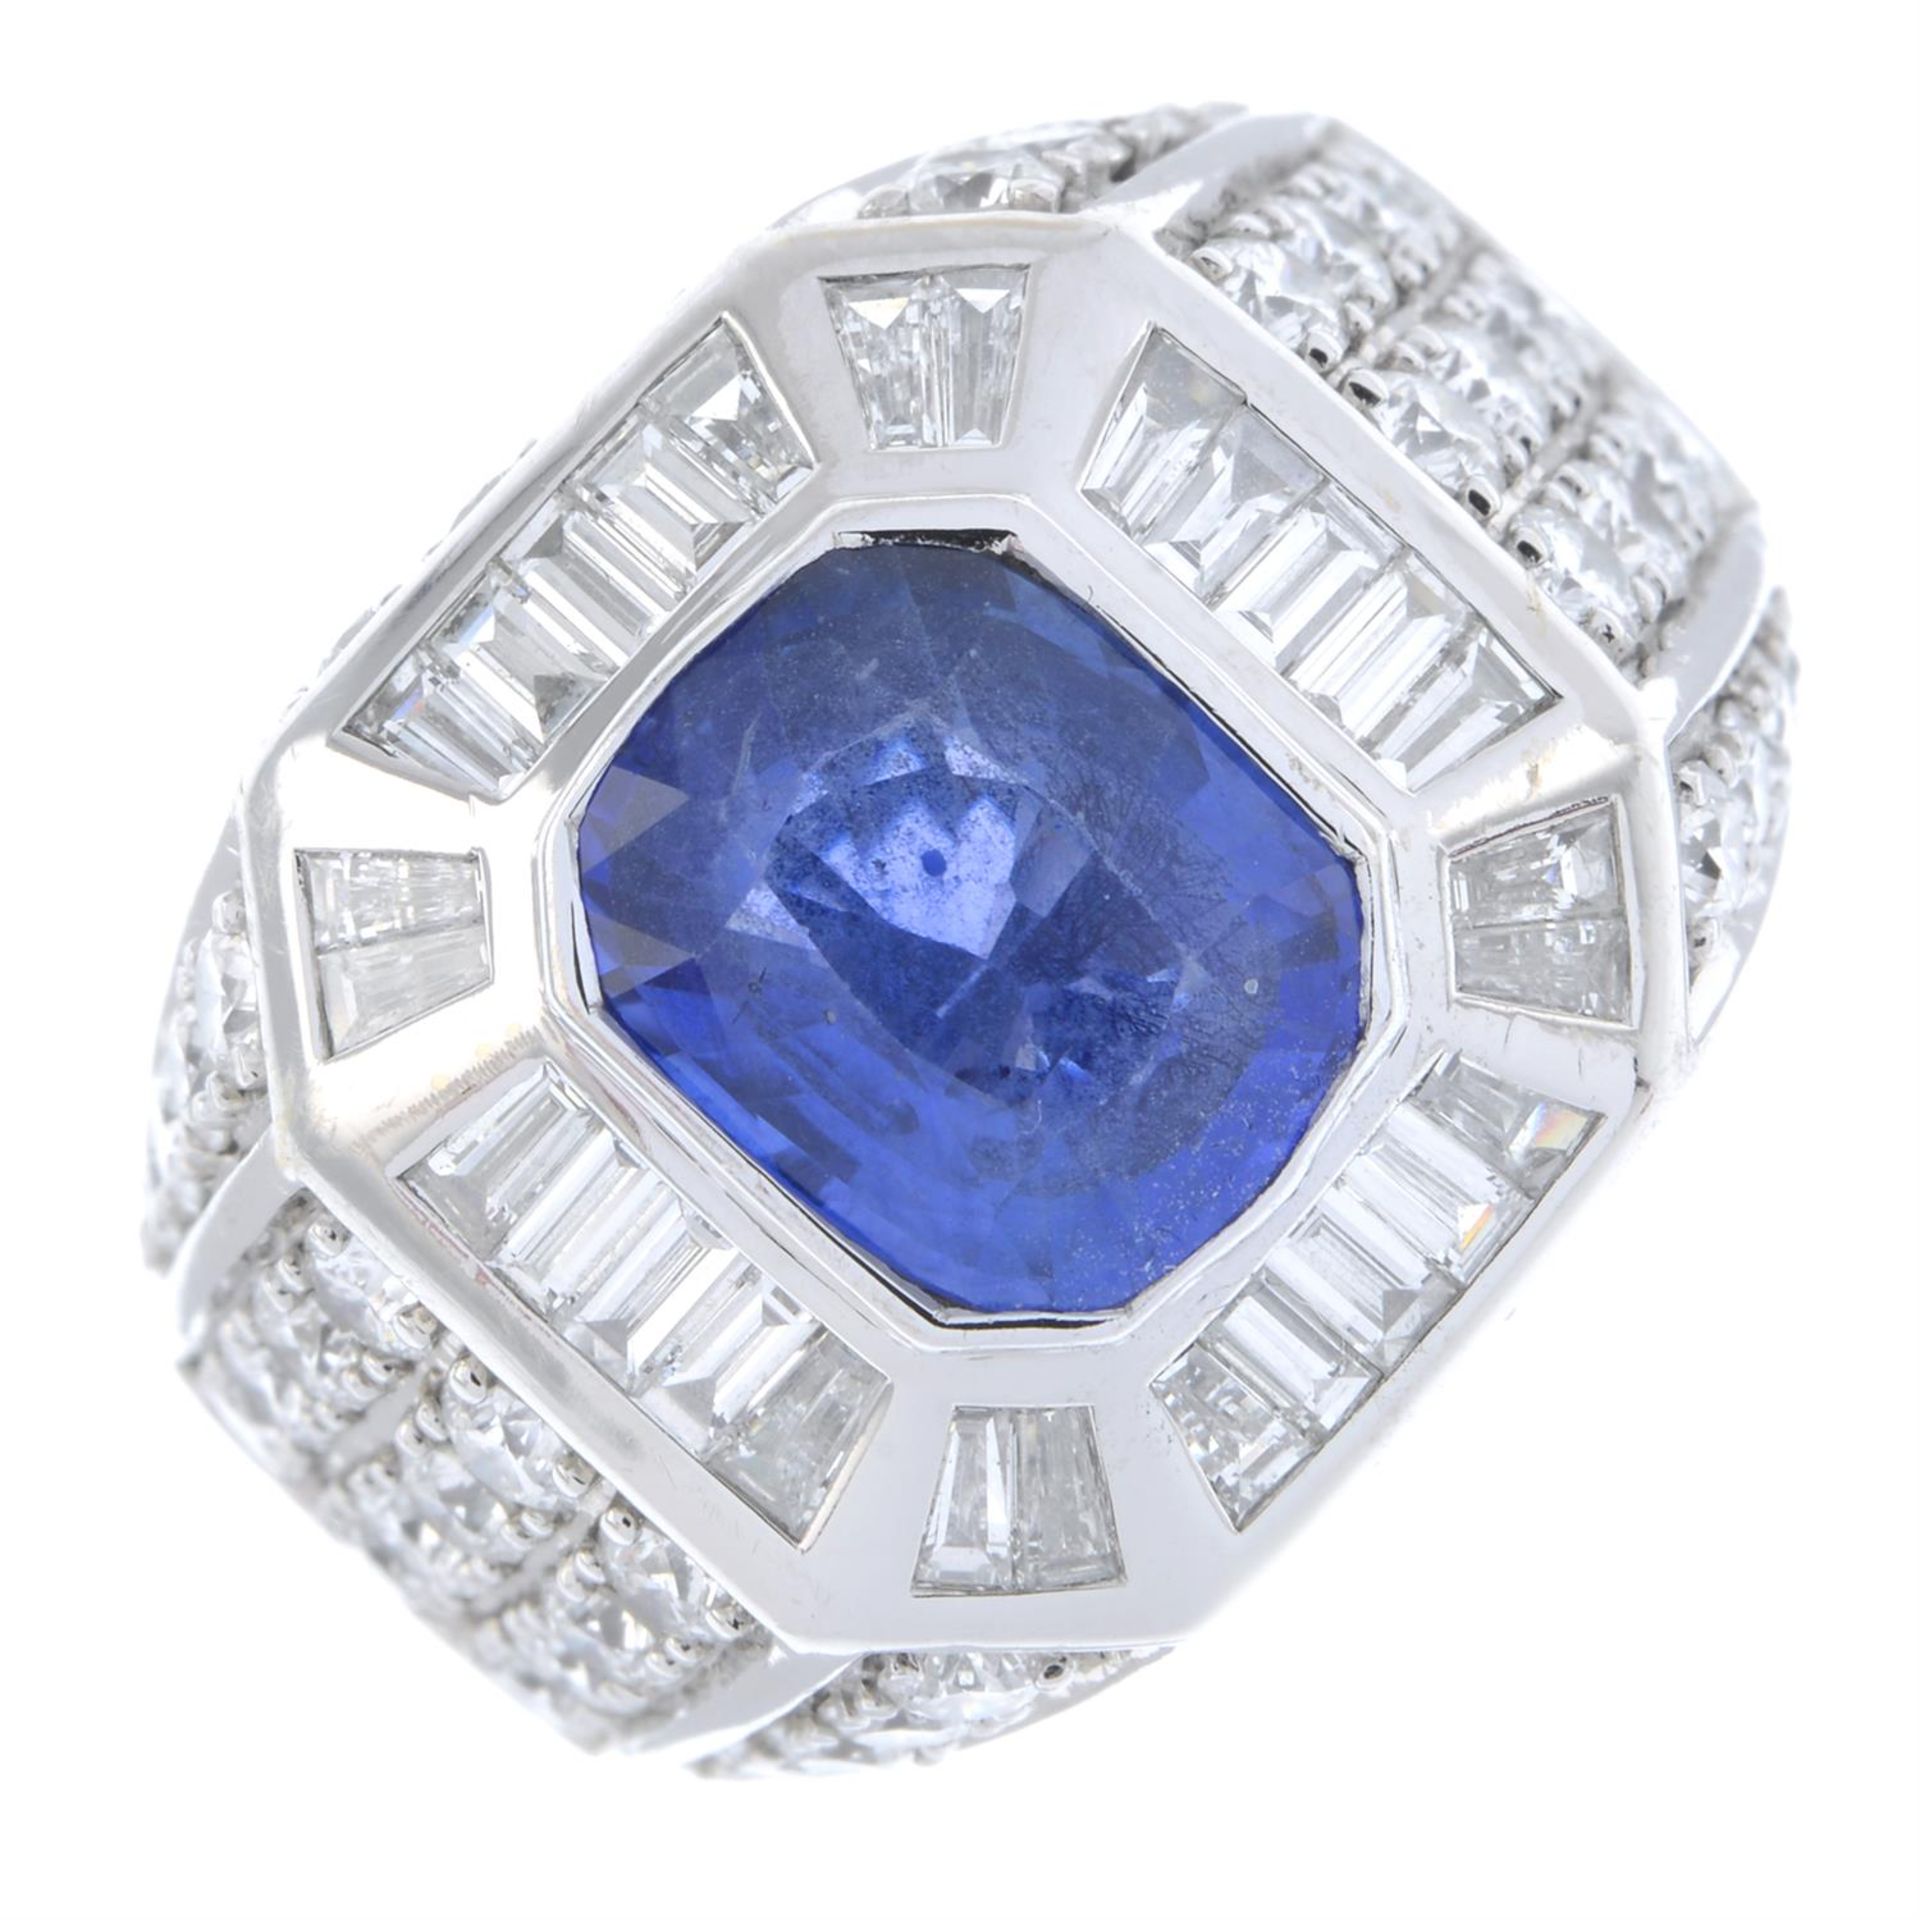 Sapphire and diamond ring